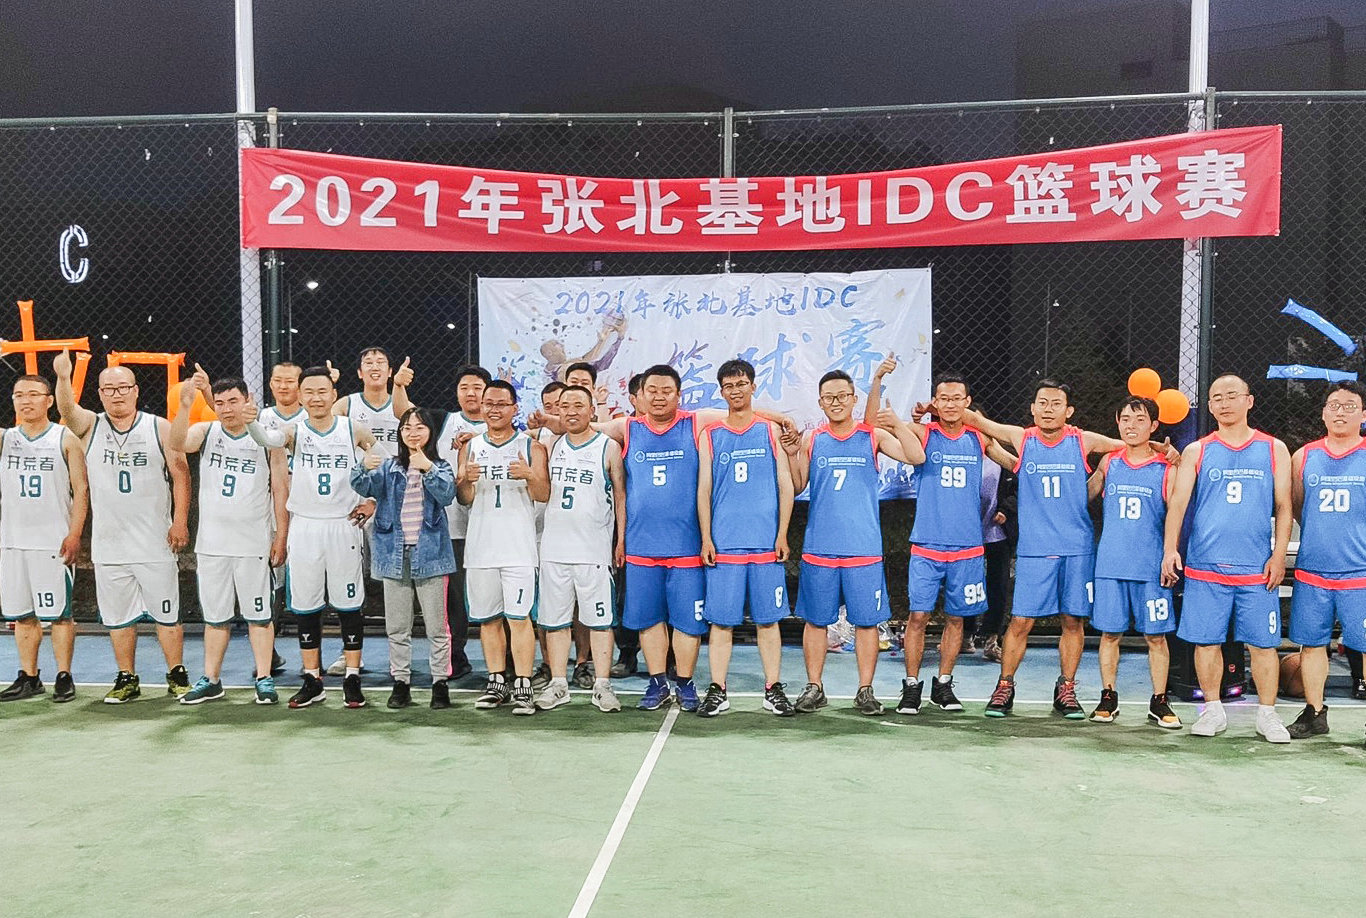 2021 Zhangbei Base IDC Basketball To...